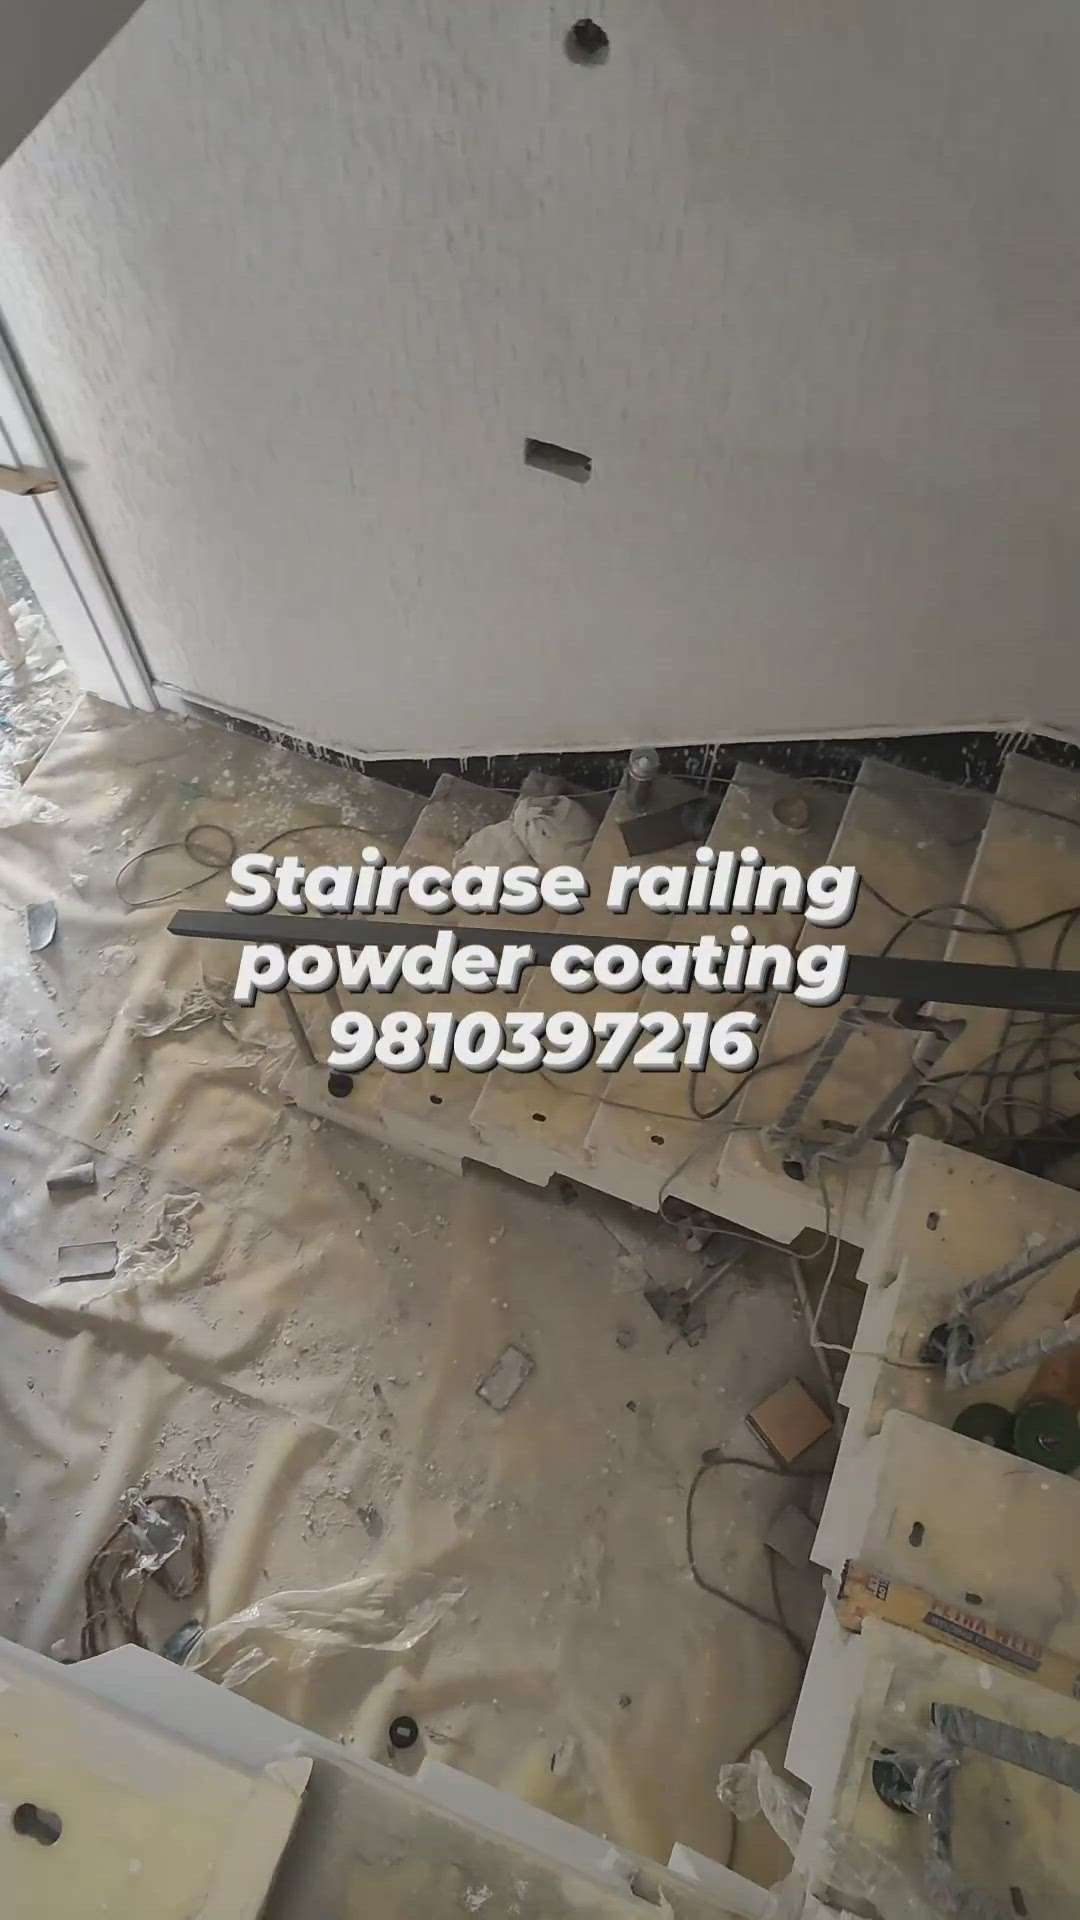 Staircase railing powder coating design by Hibza sterling interiors pvt ltd #gatelookcraft #staircaserailing #powdercoatingrailing #railingdesing #gate #aluminiumprofilegate